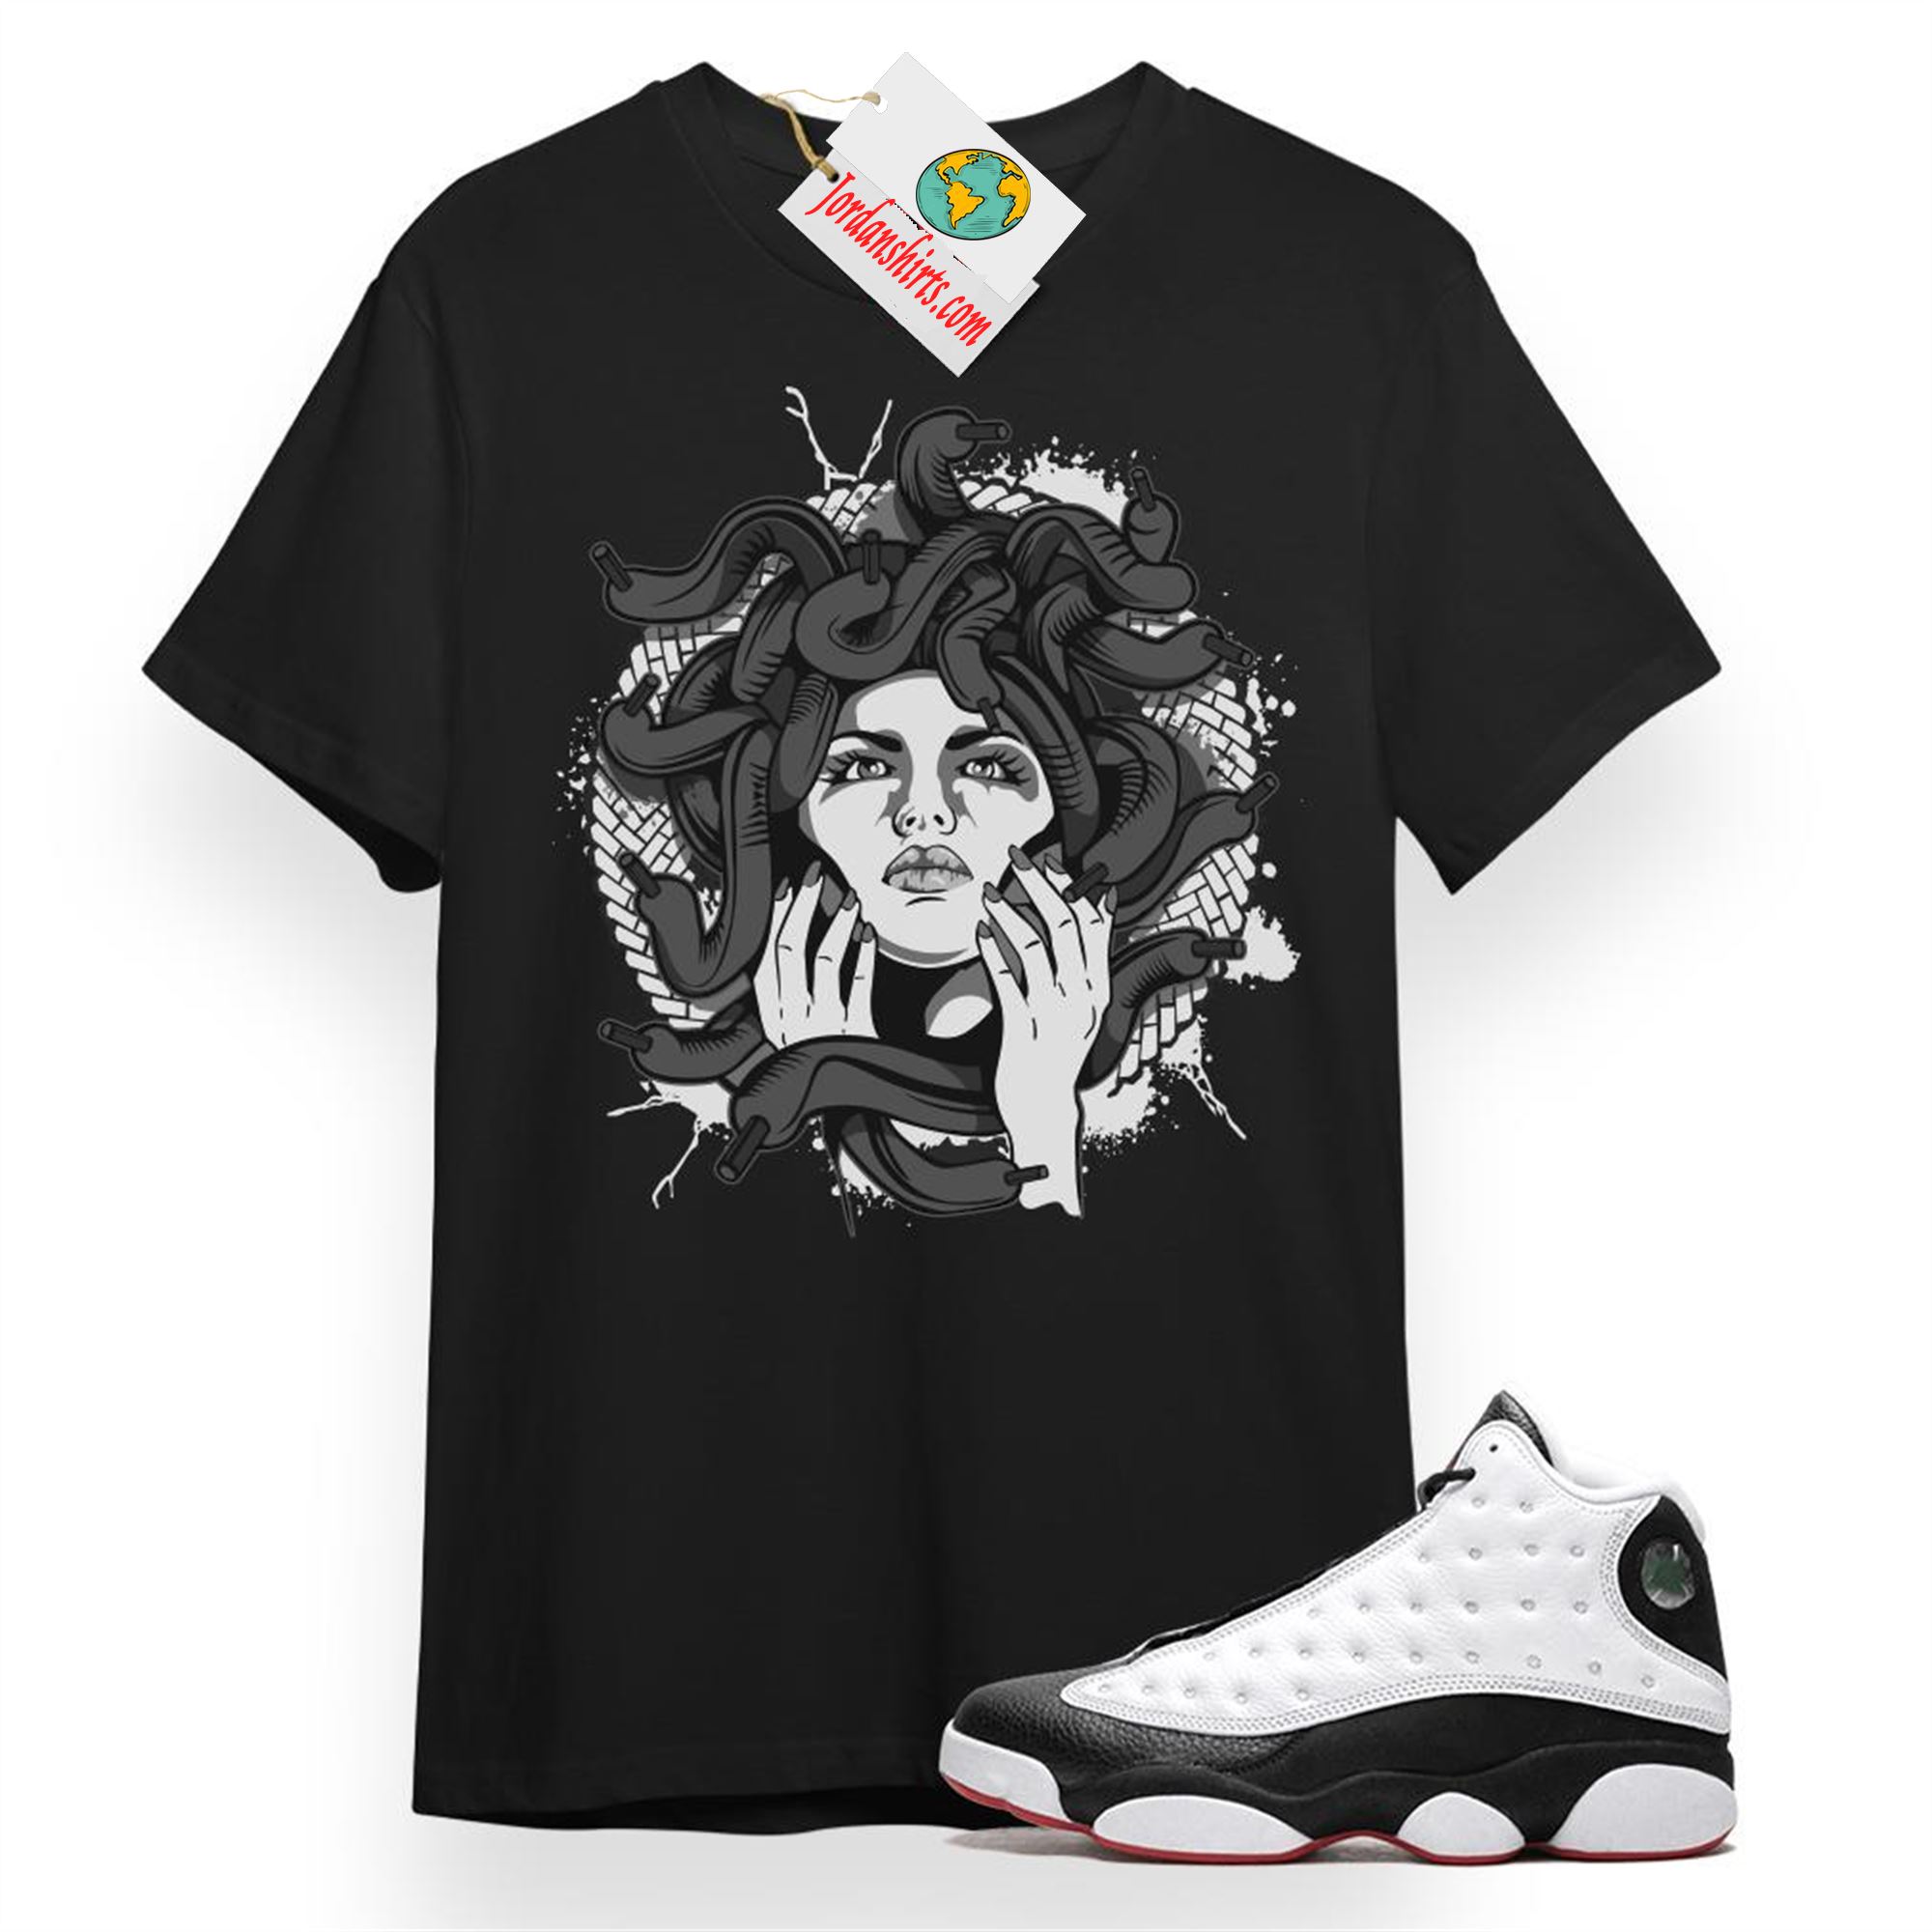 Jordan 13 Shirt, Medusa Black T-shirt Air Jordan 13 He Got Game 13s Full Size Up To 5xl